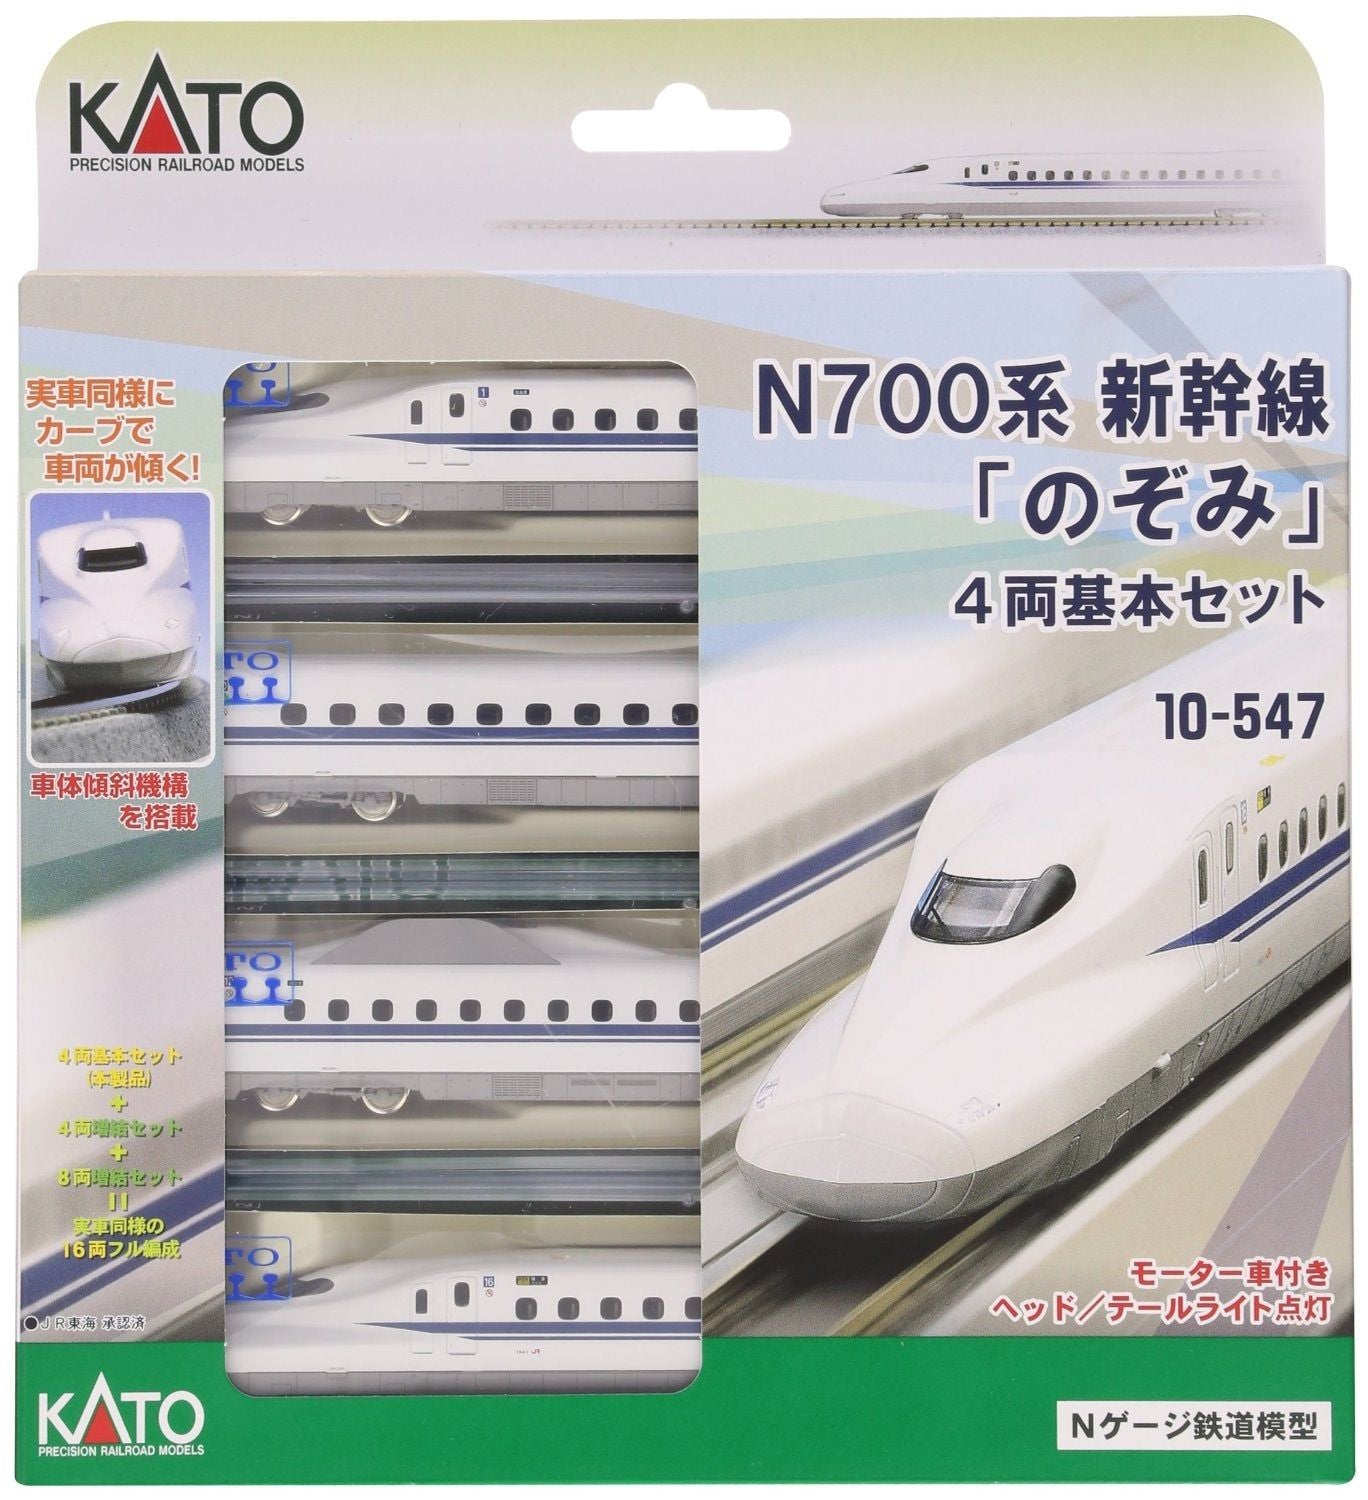 KATO 10-547 Shinkansen Series N700 Nozomi Basic - BanzaiHobby